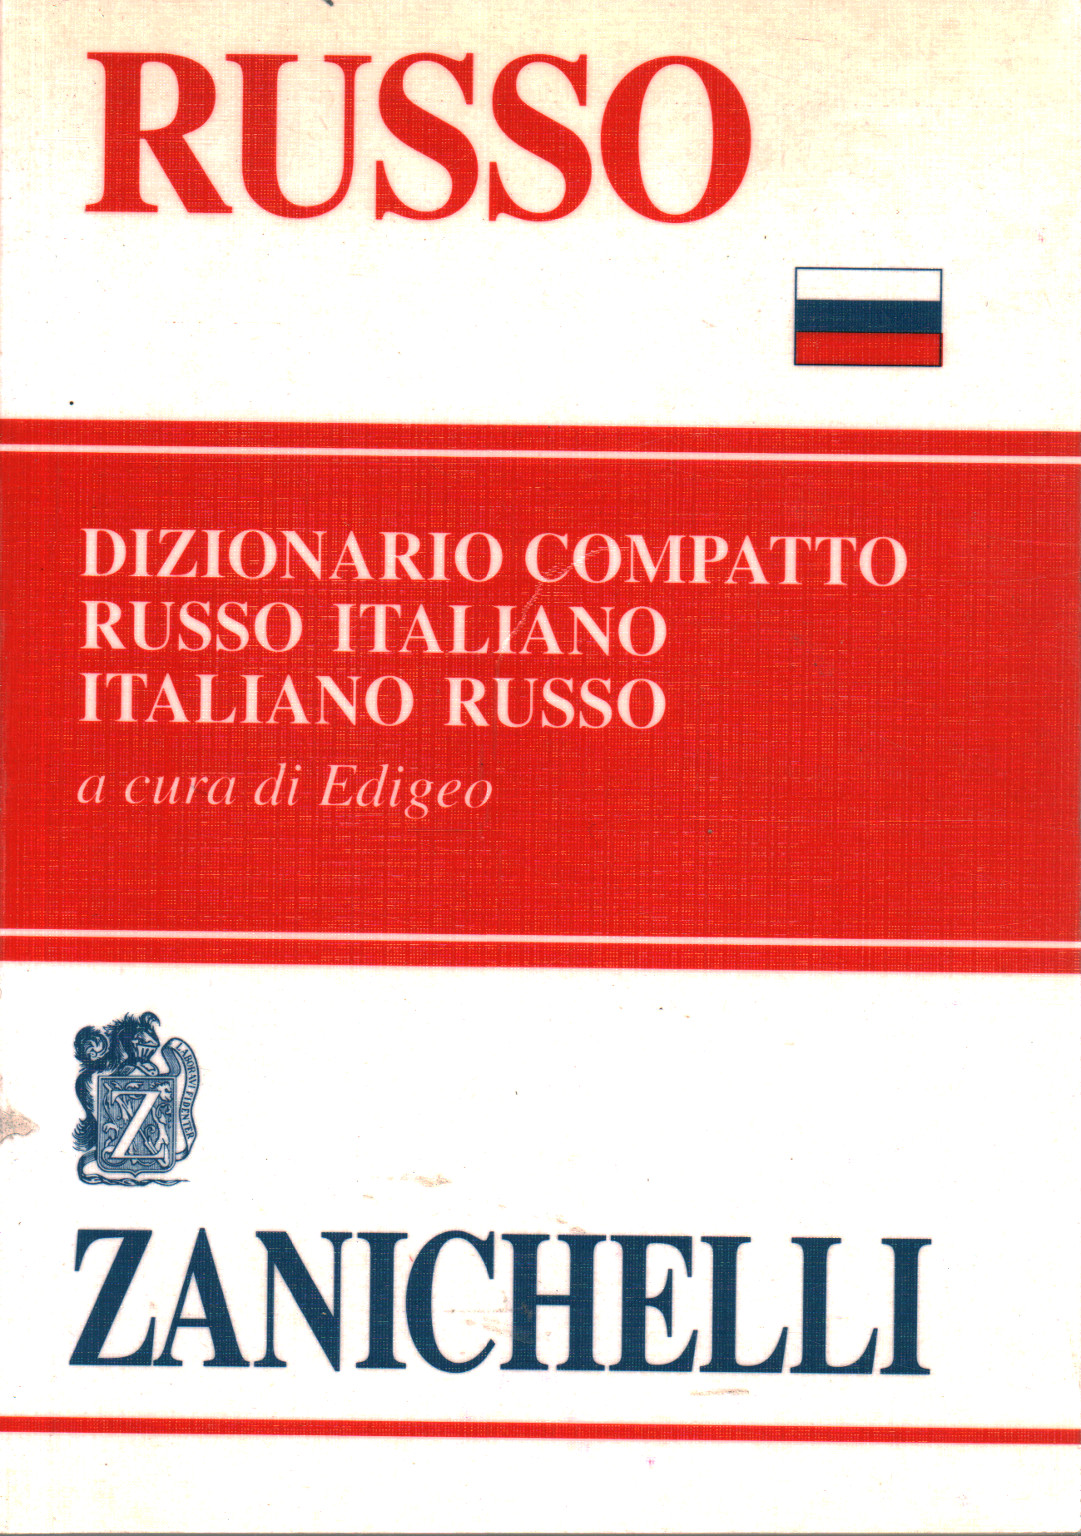 Dictionnaire compact. Russe Italien Italien Russe, s.a.